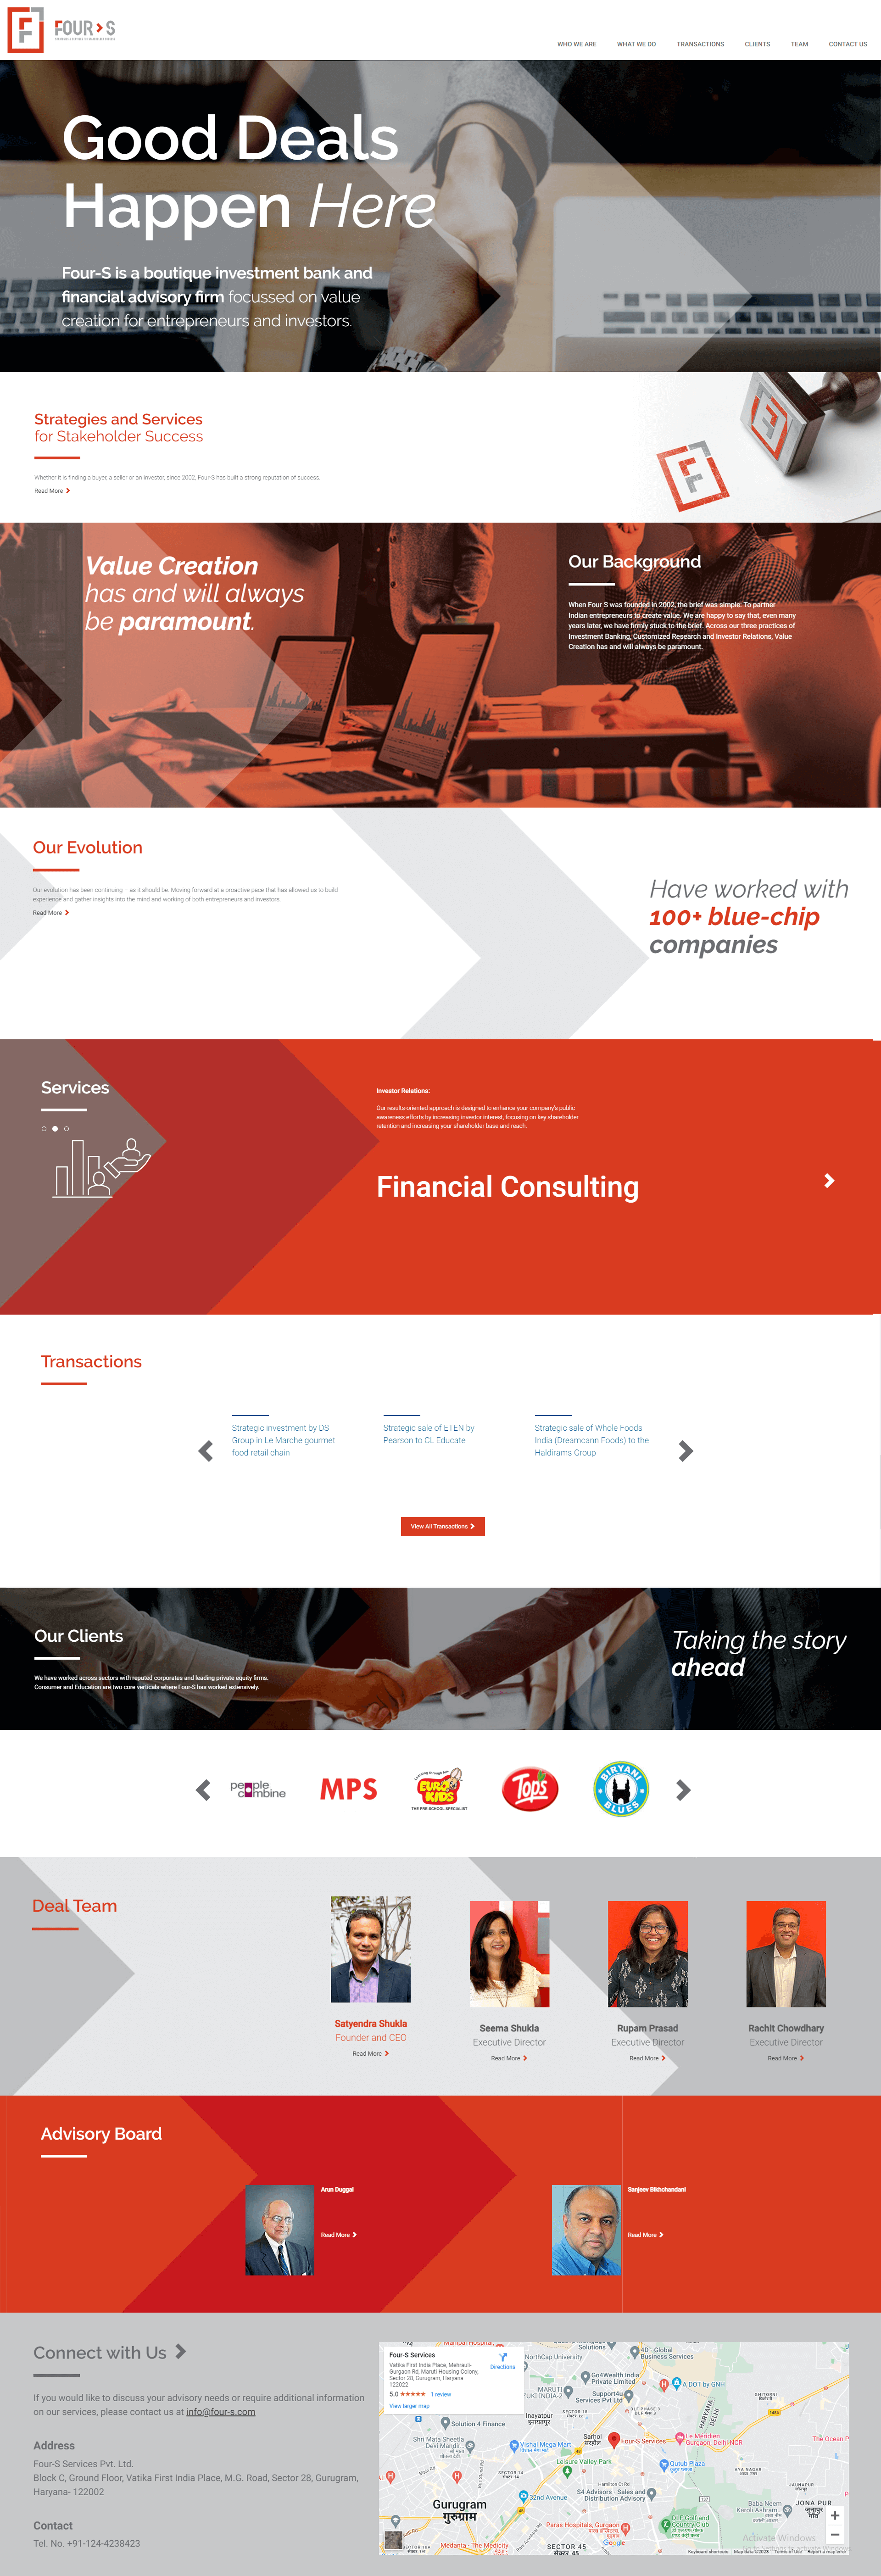 Four-s website screenshot